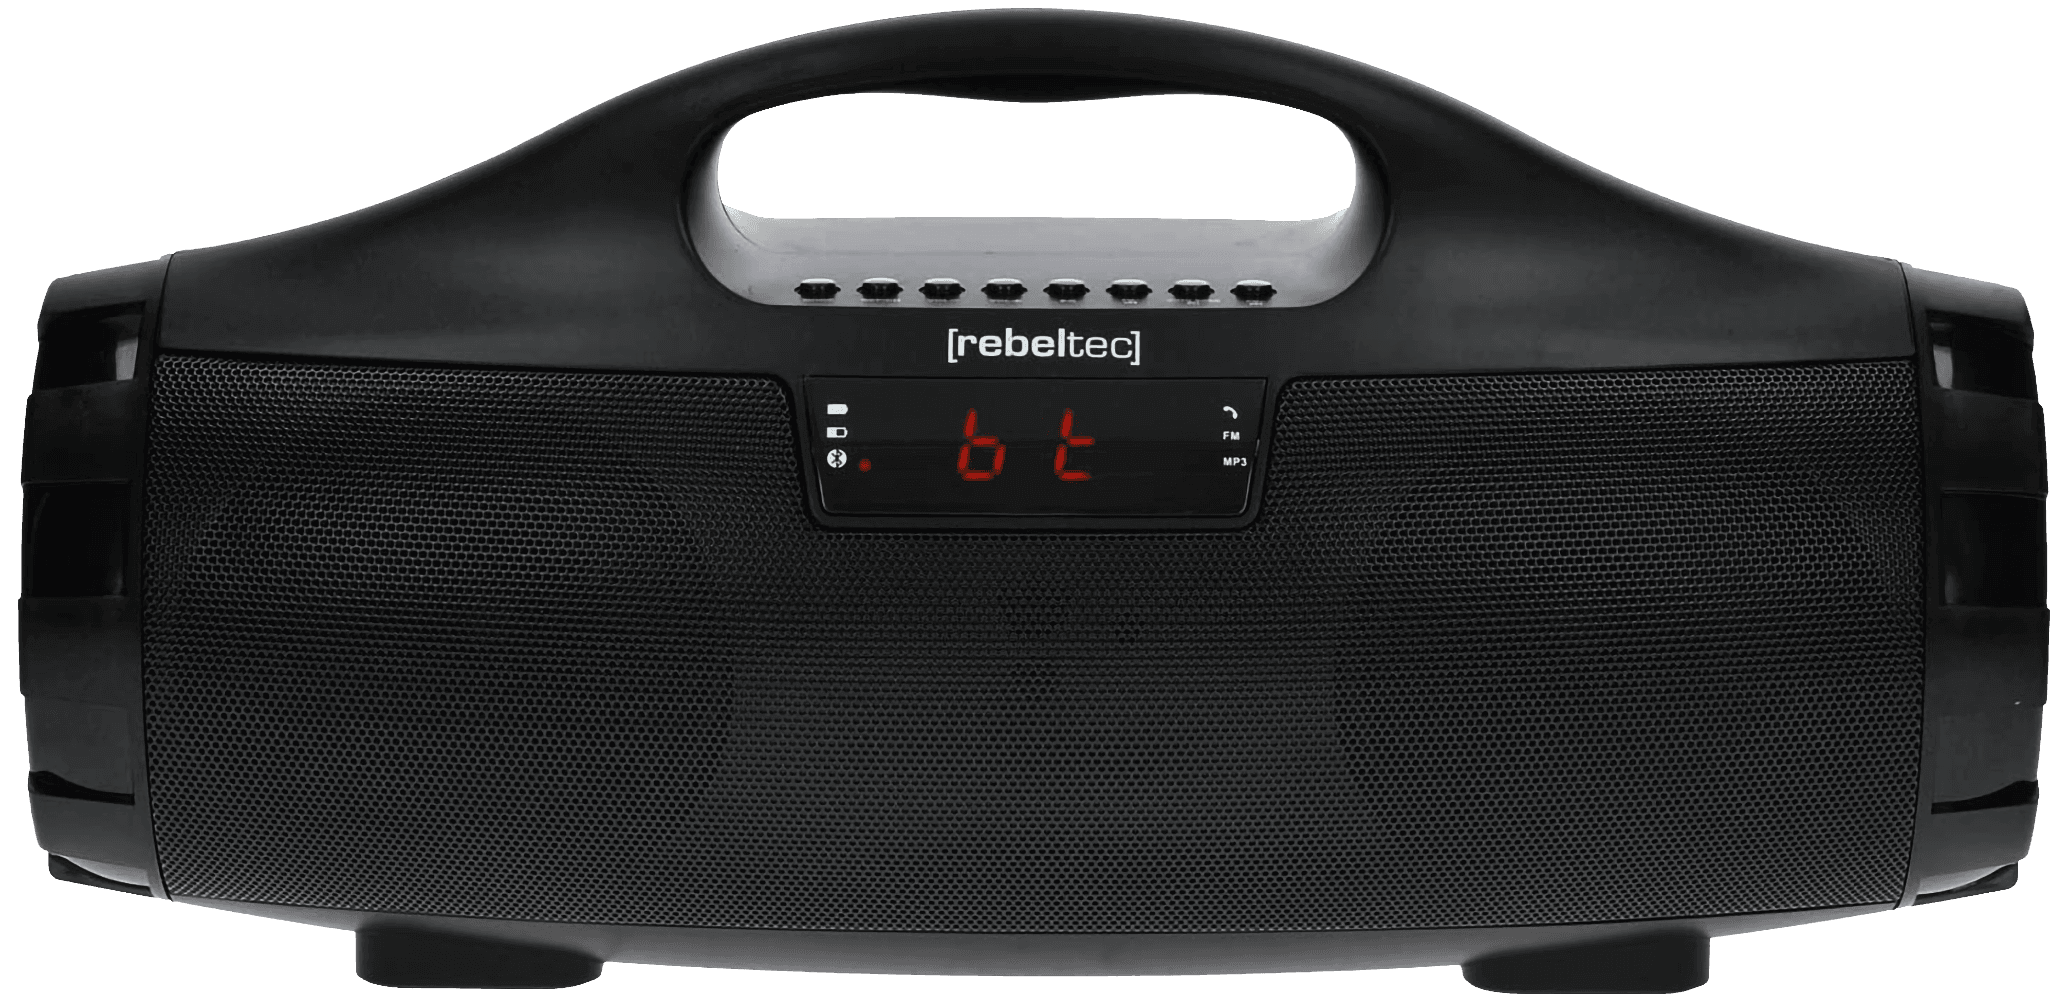 LG V40 ThinQ bluetooth hangszóró Rebeltec Soundbox 390 fekete